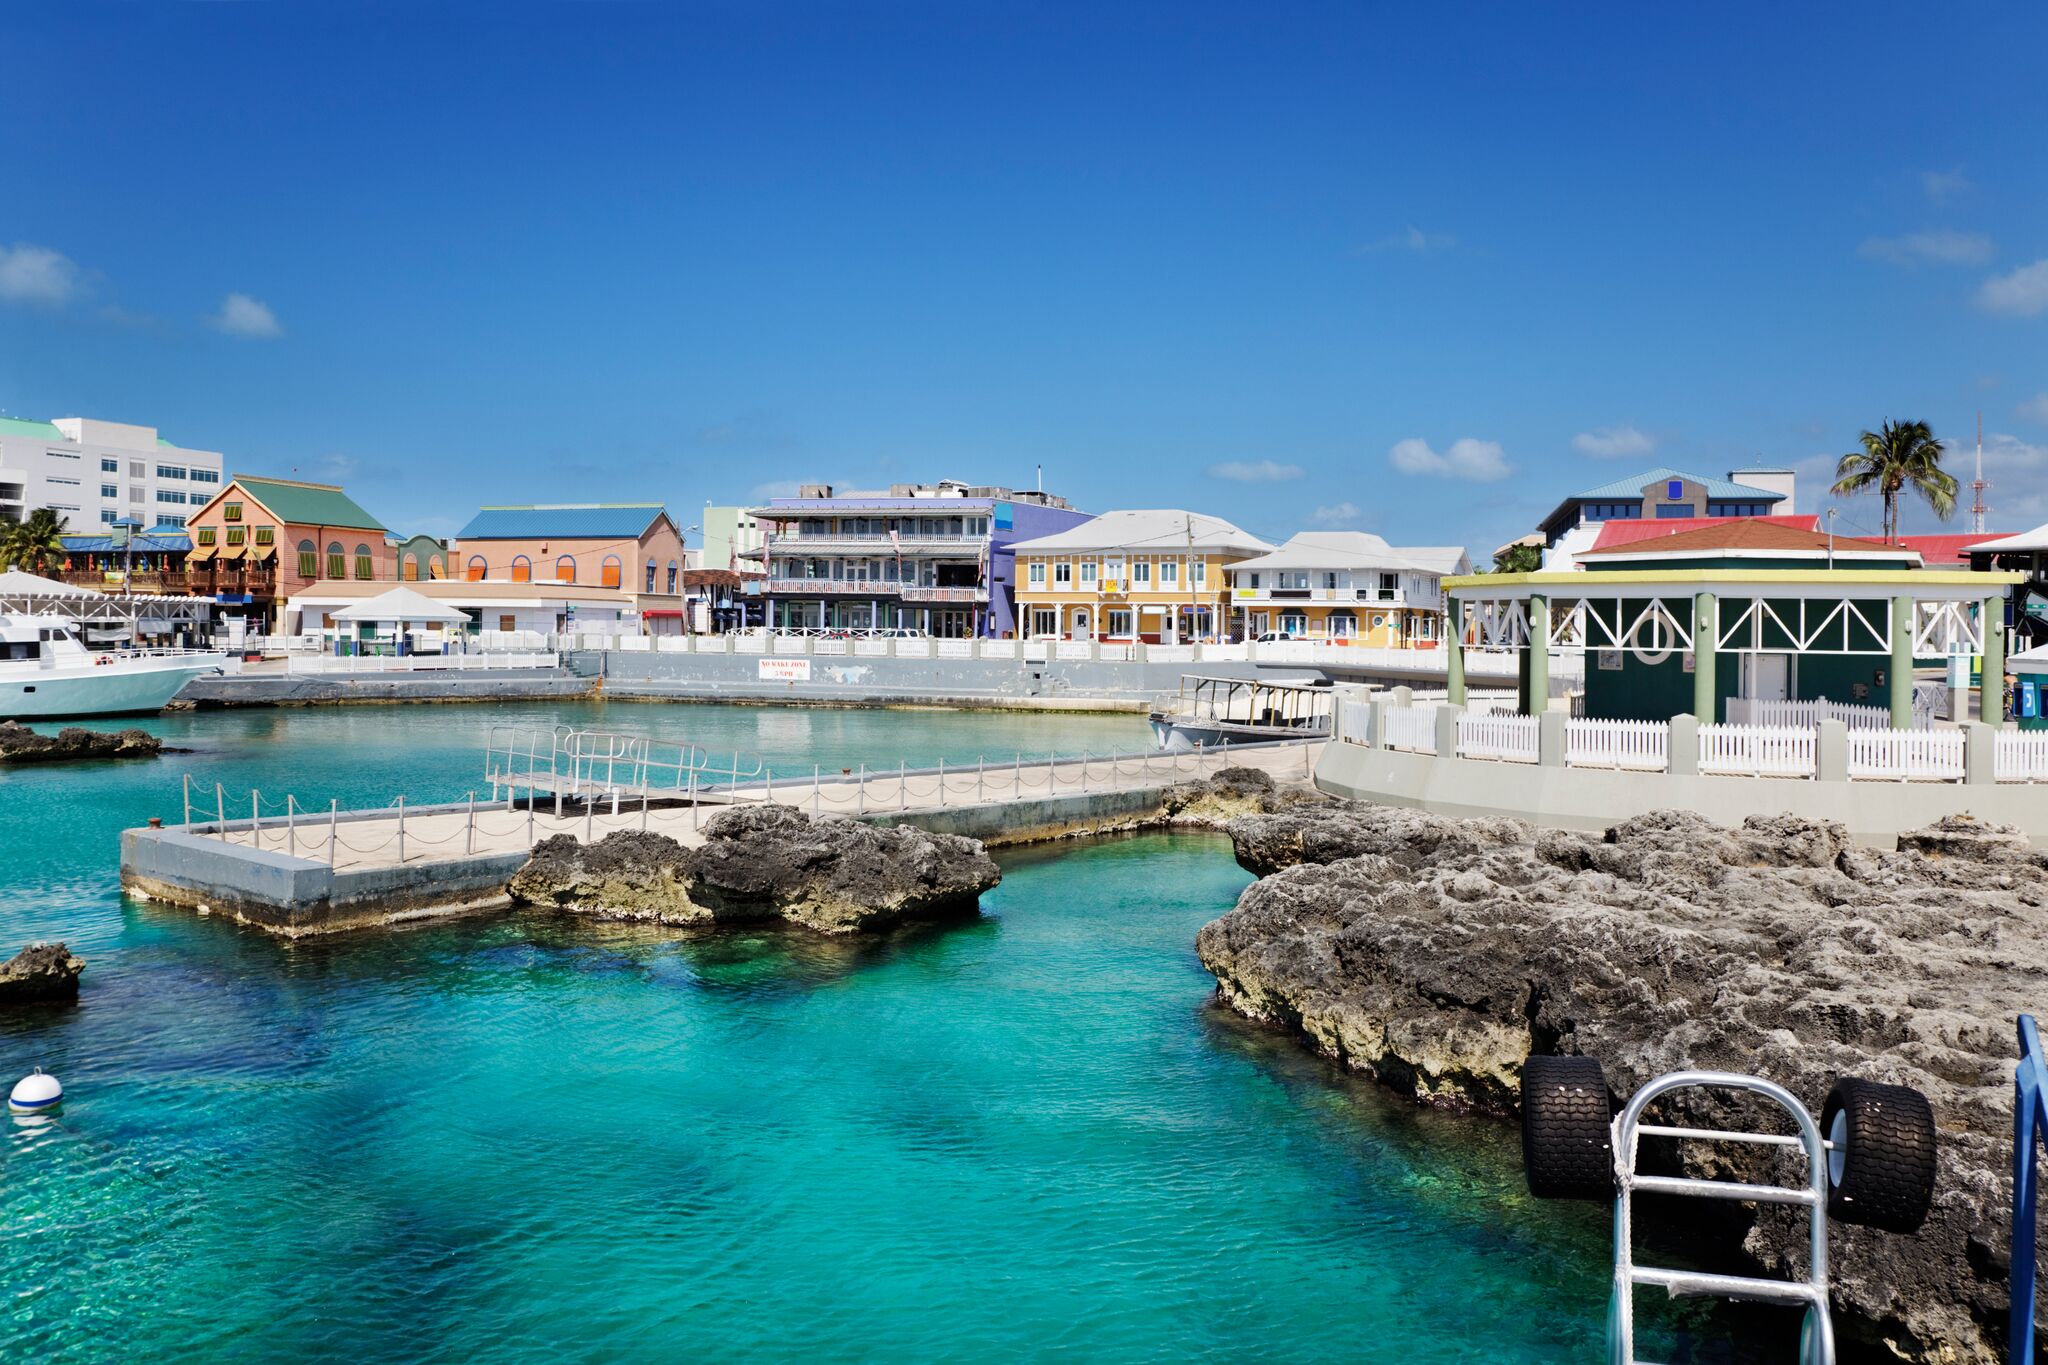 Cayman Islands National Tourism Plan